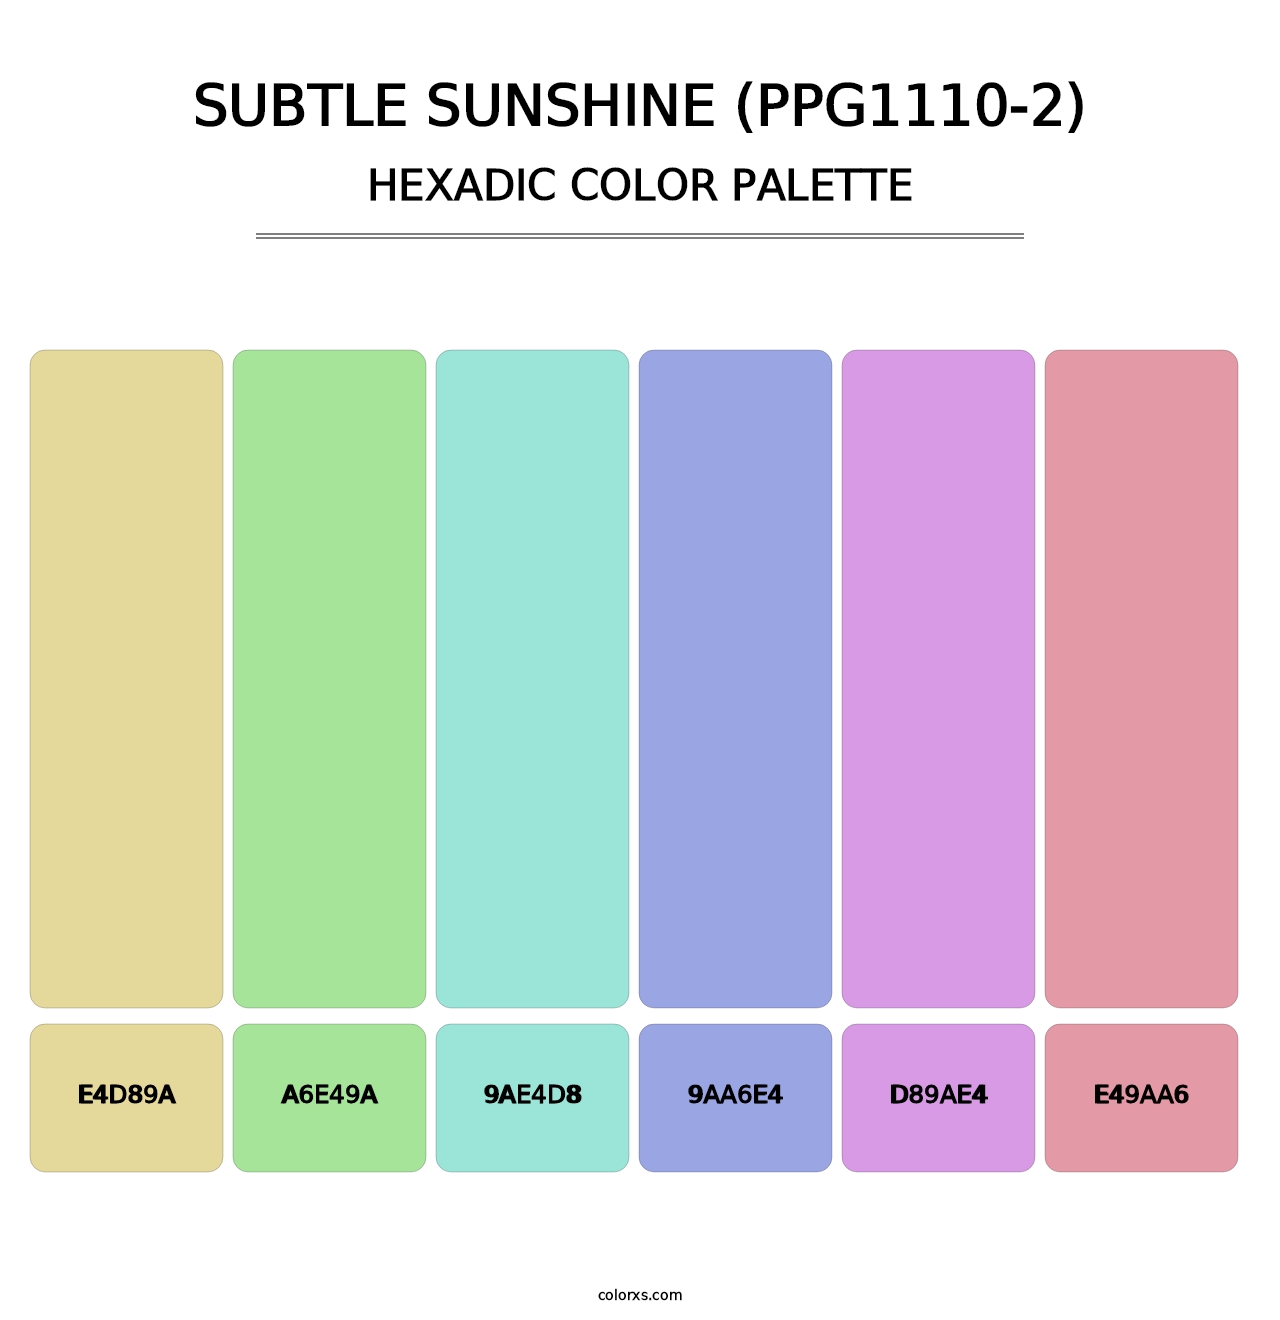 Subtle Sunshine (PPG1110-2) - Hexadic Color Palette